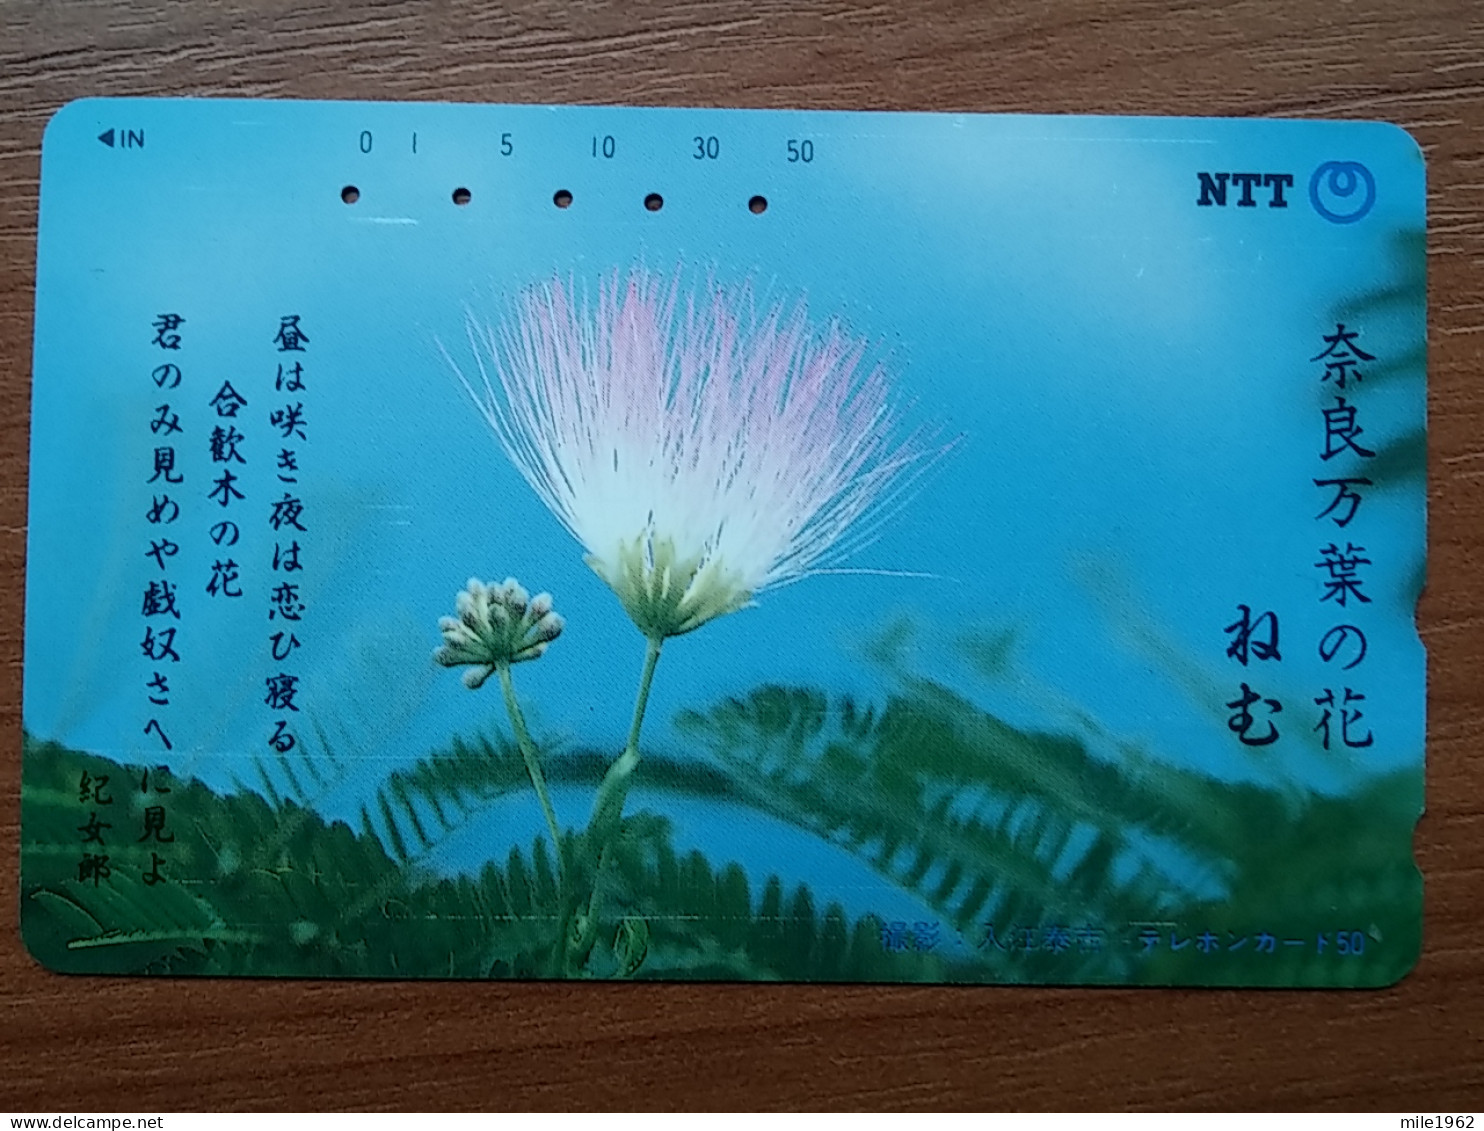 T-382 - JAPAN, Japon, Nipon, TELECARD, PHONECARD, Flower, Fleur, NTT 331-249 - Flores